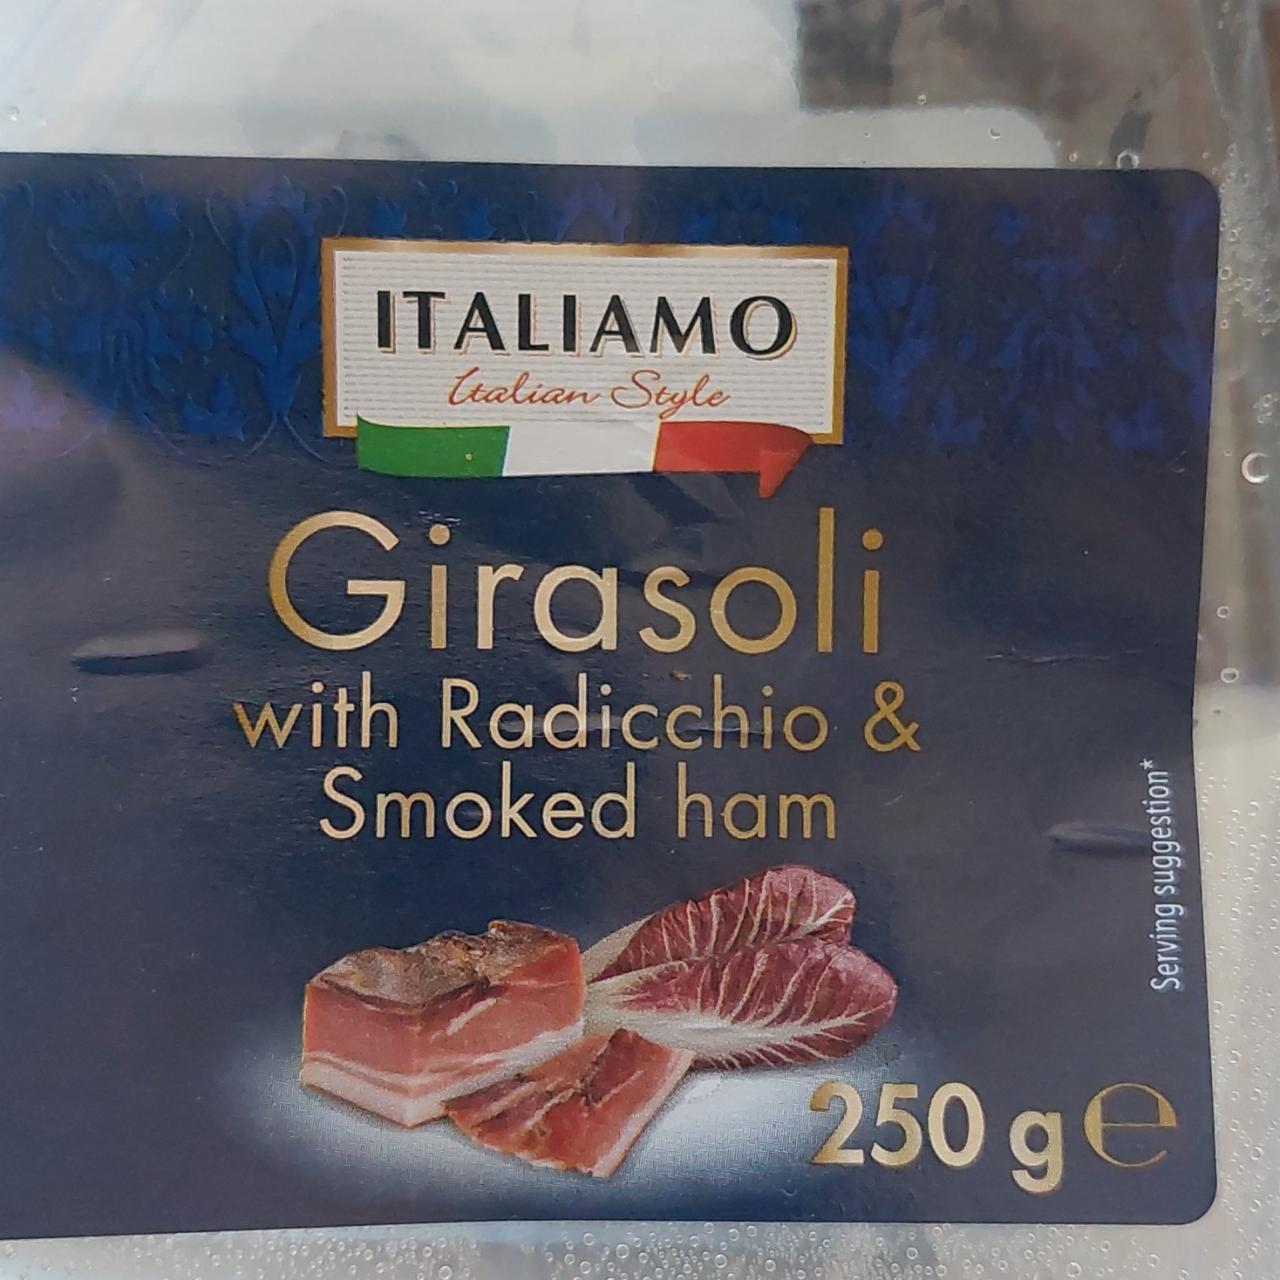 Fotografie - Girasoli with Radicchio & Smoked ham Italiamo